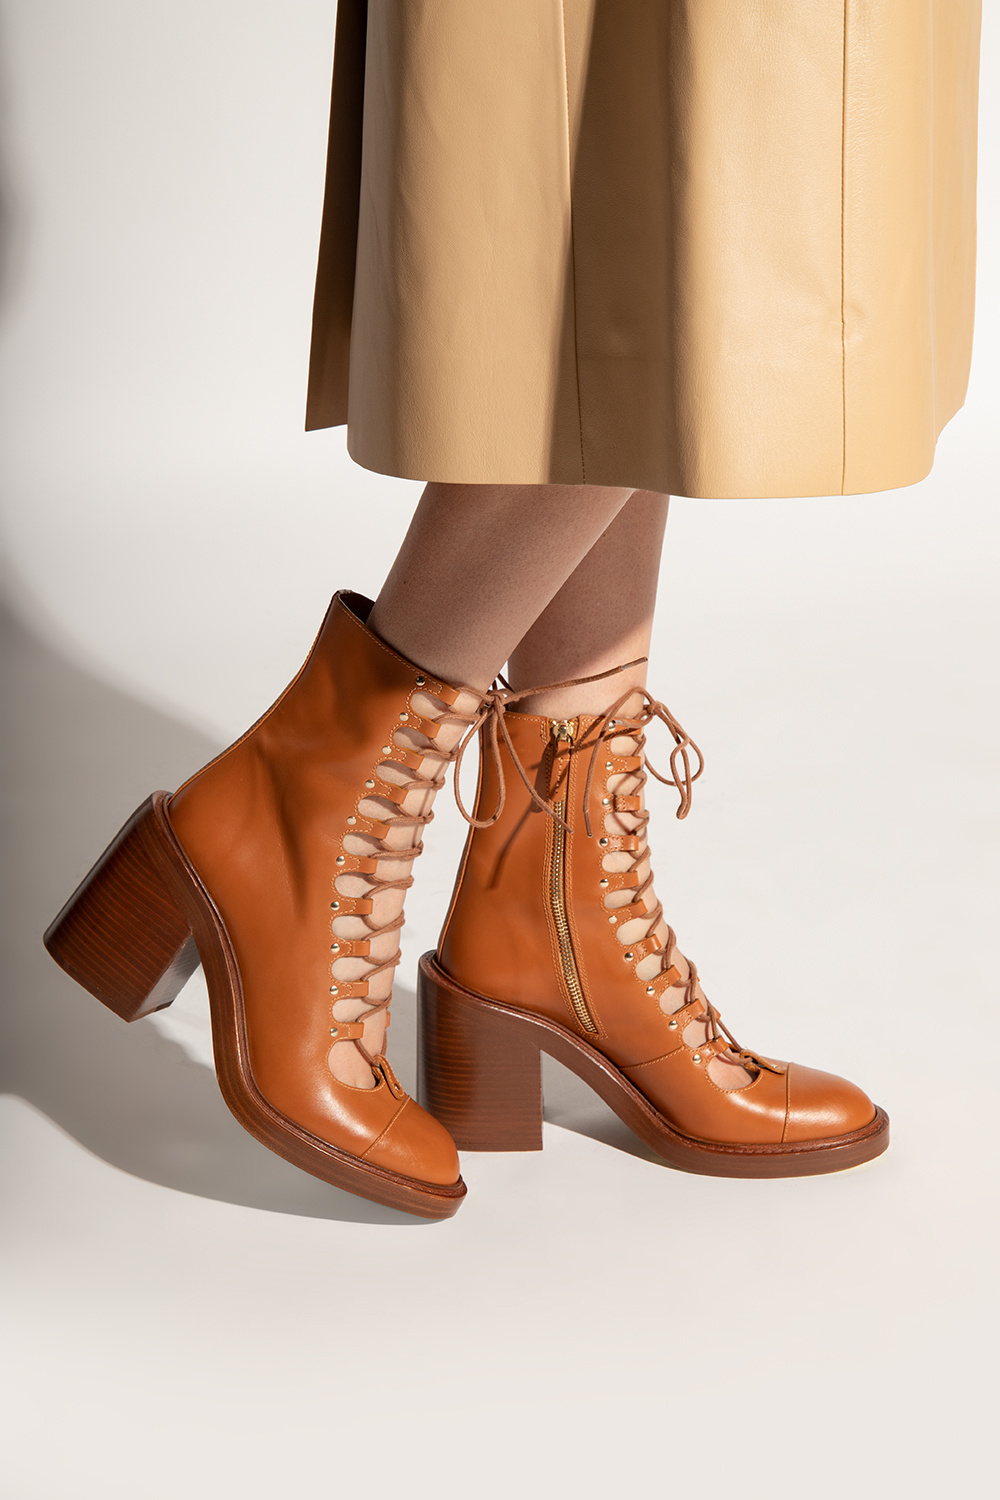 Chloé ‘May’ heeled boots